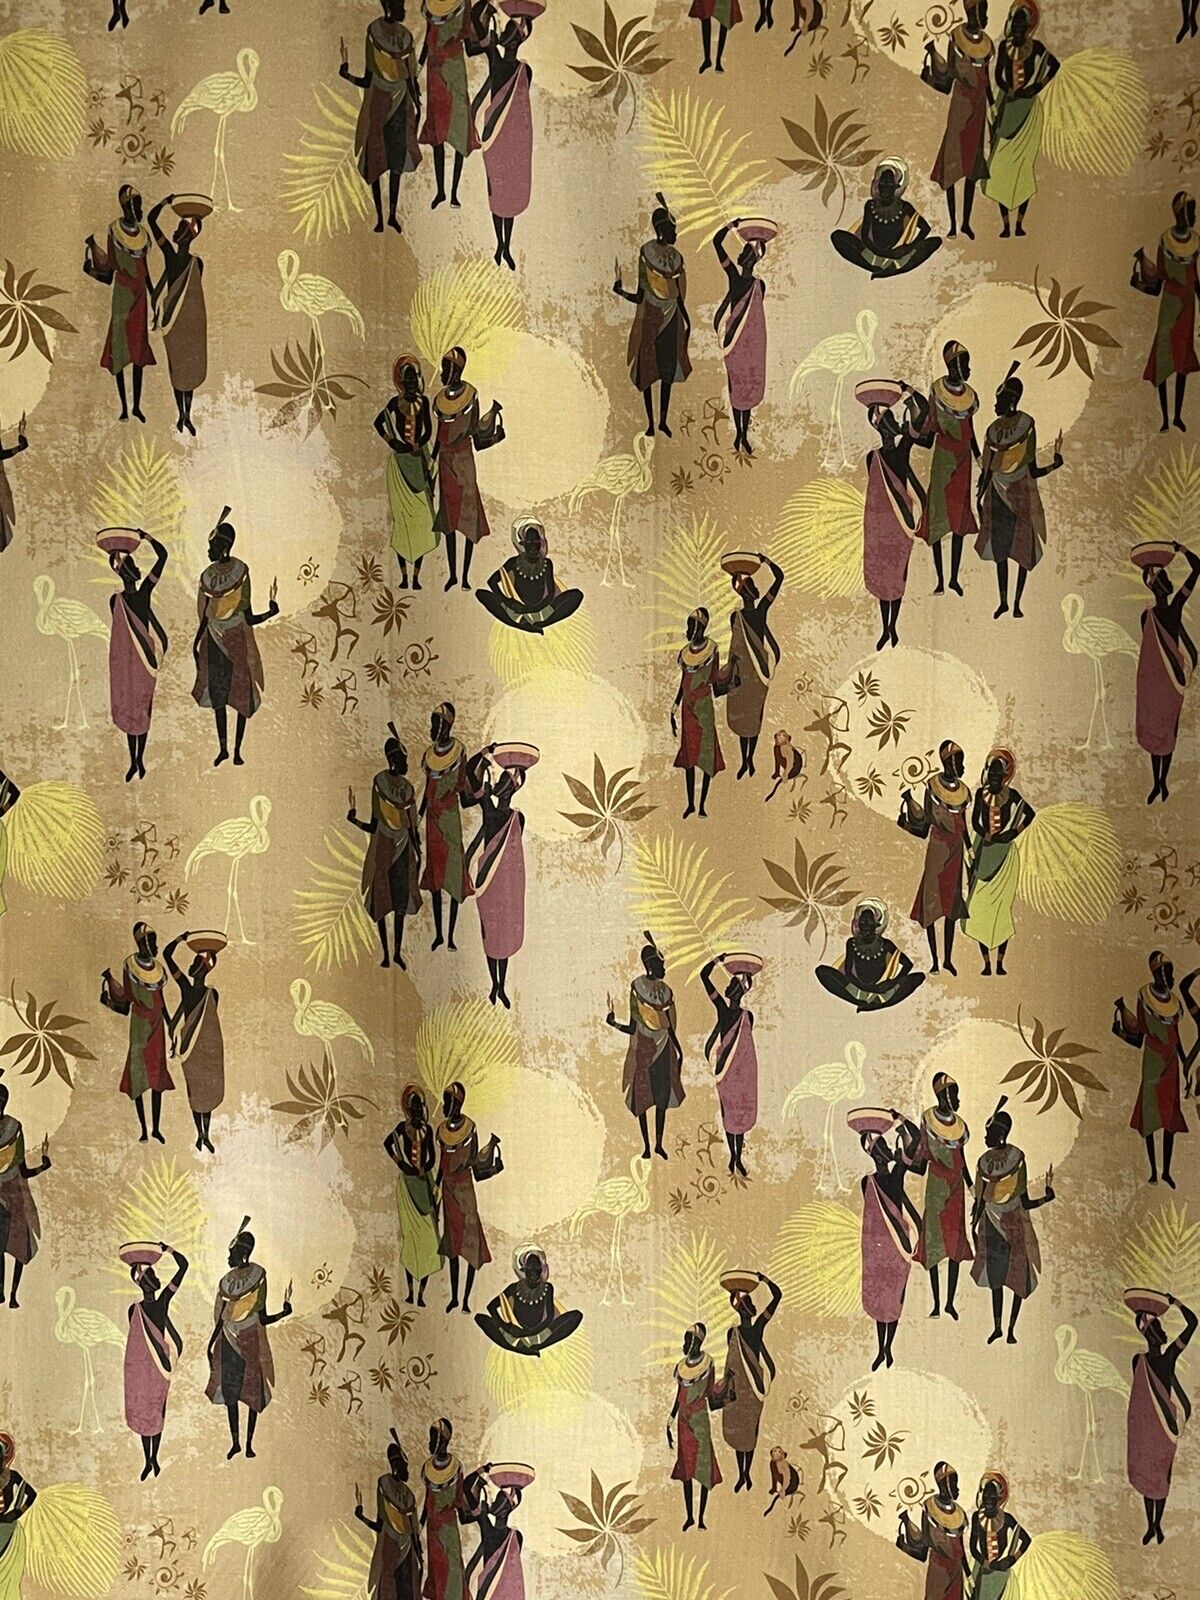 African Ladies Print Tribal Cotton Fabric Panel 140x100 Baobab Fruit Tree Leaves Yellow